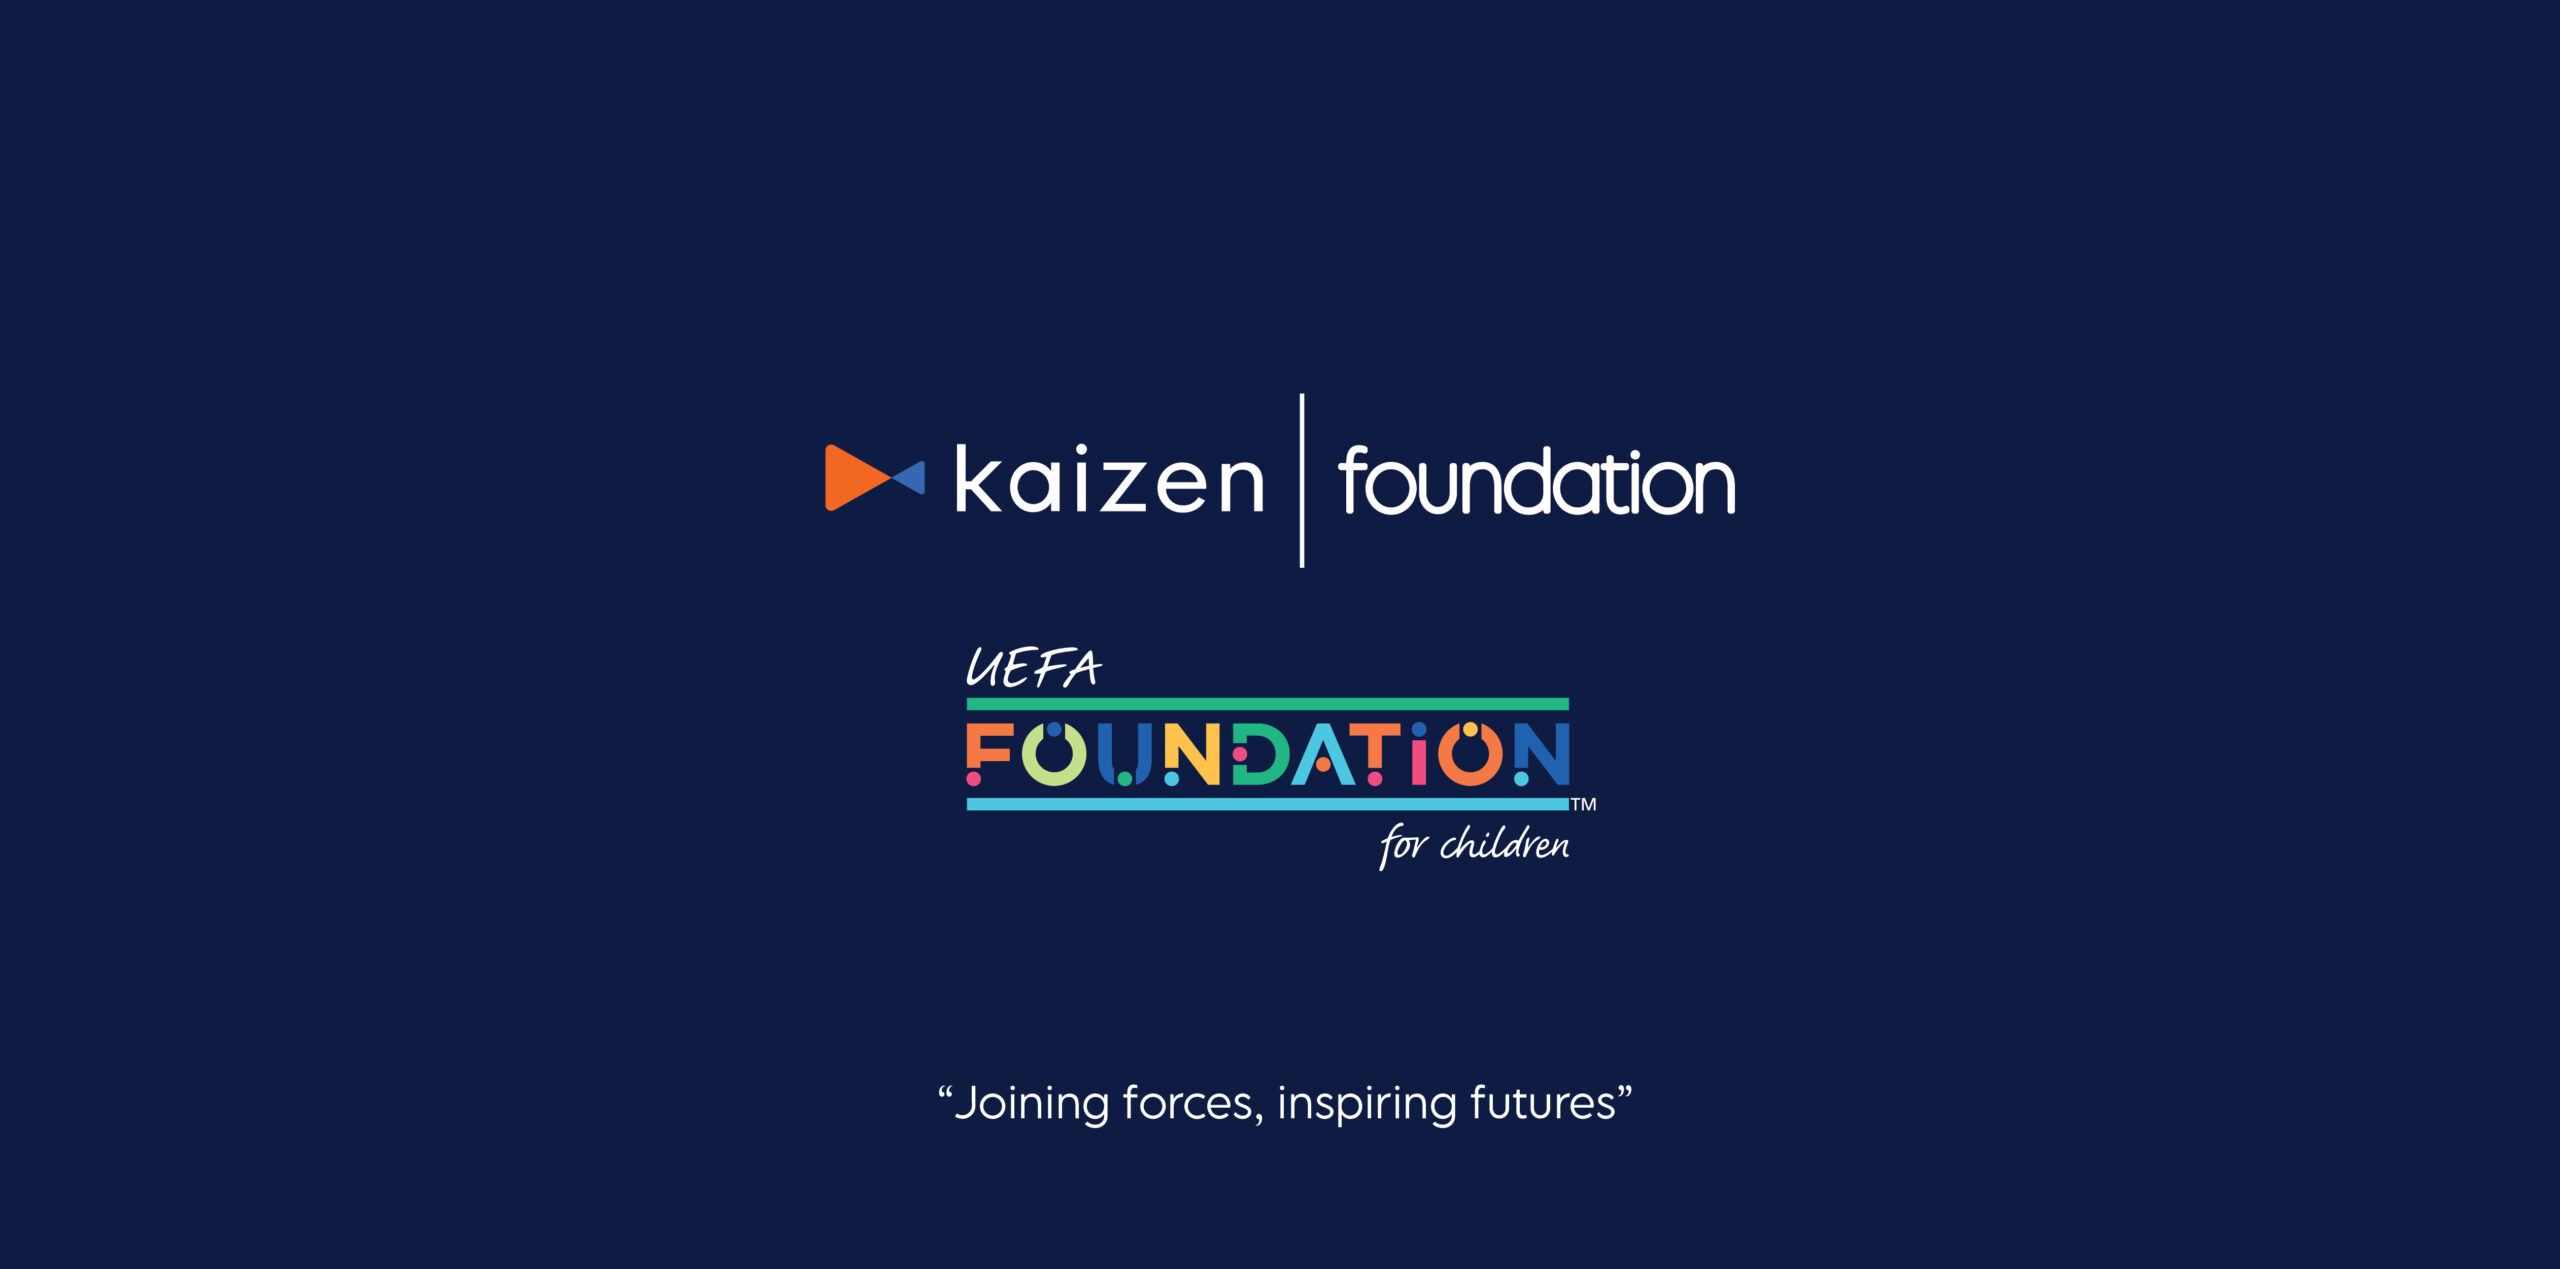 Kaizen Foundation and UEFA Foundation for Children partner for Euro